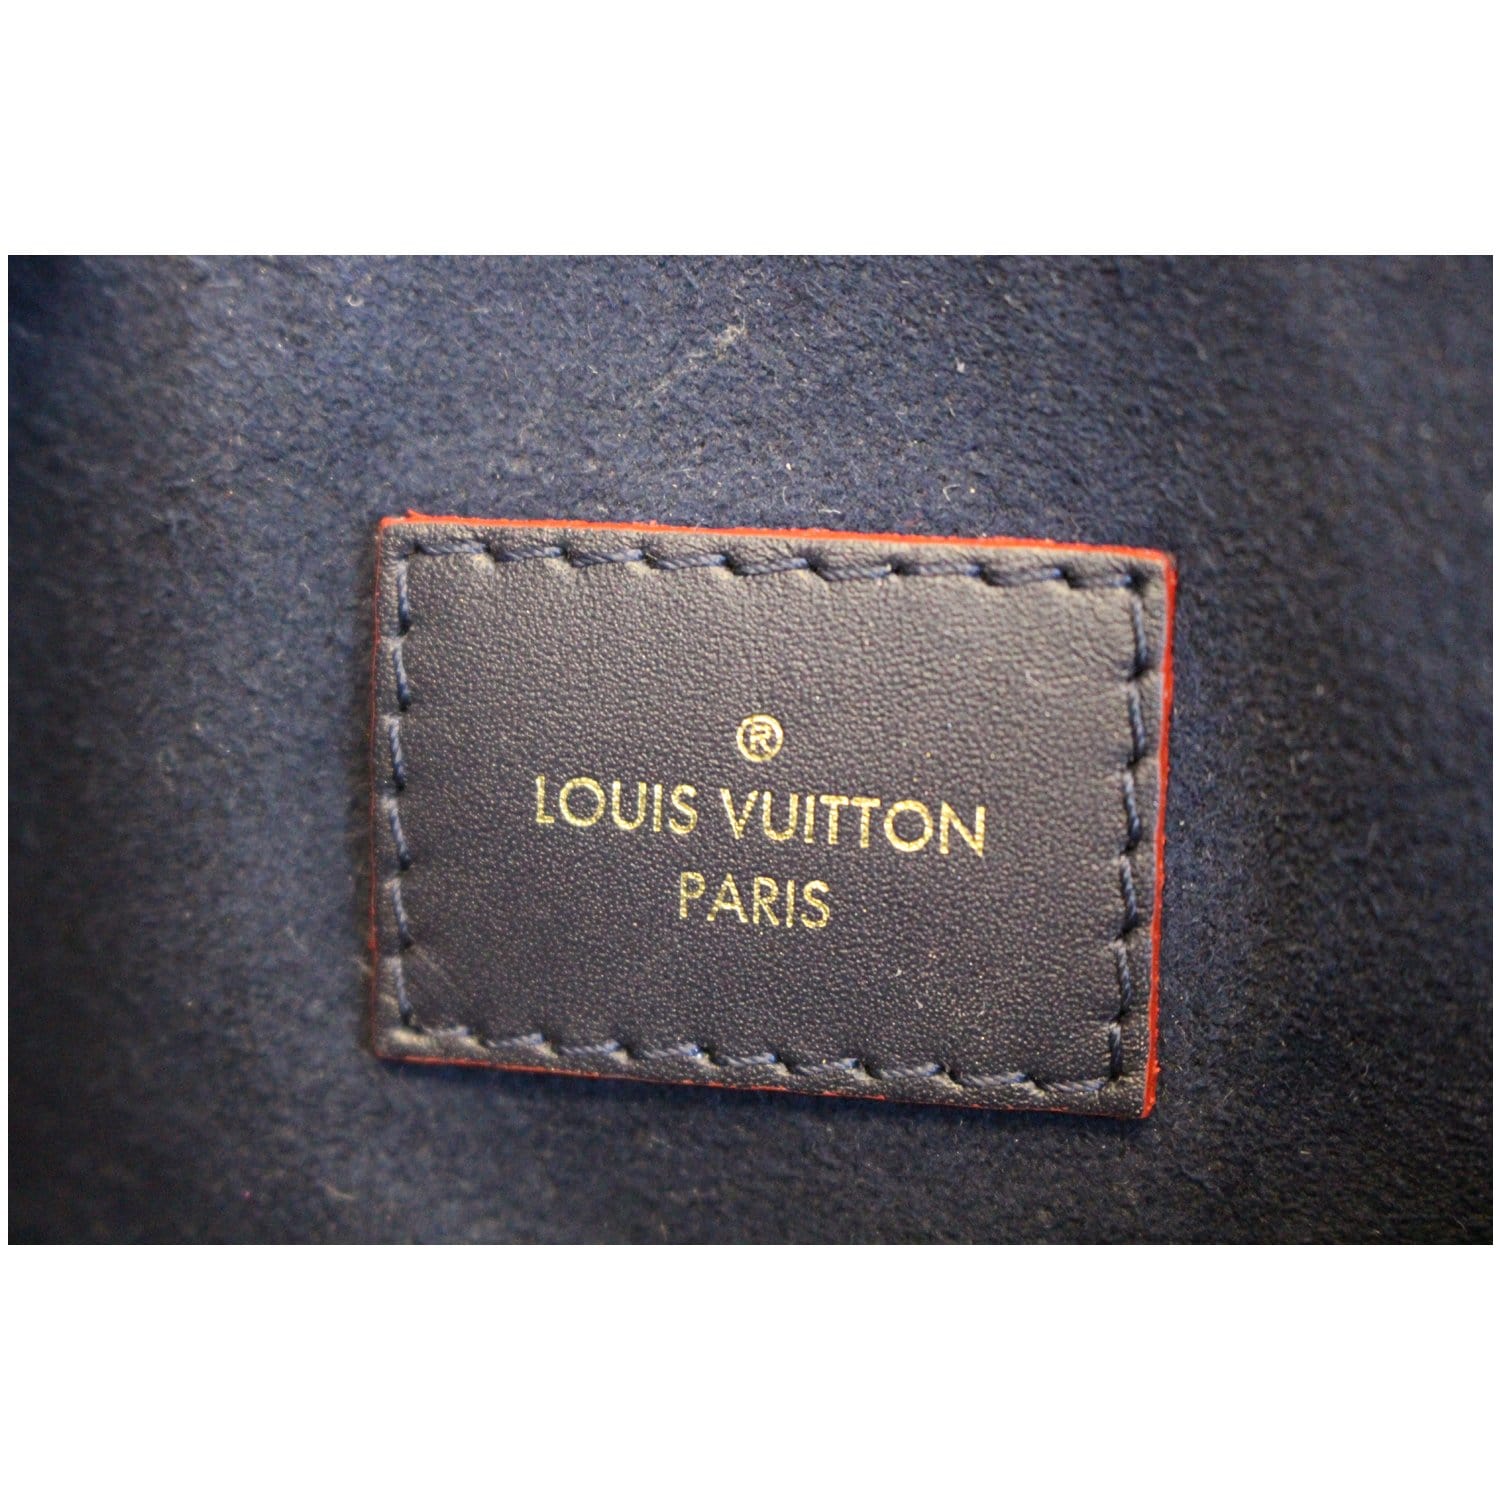 Louis Vuitton Voyage Tote 337685